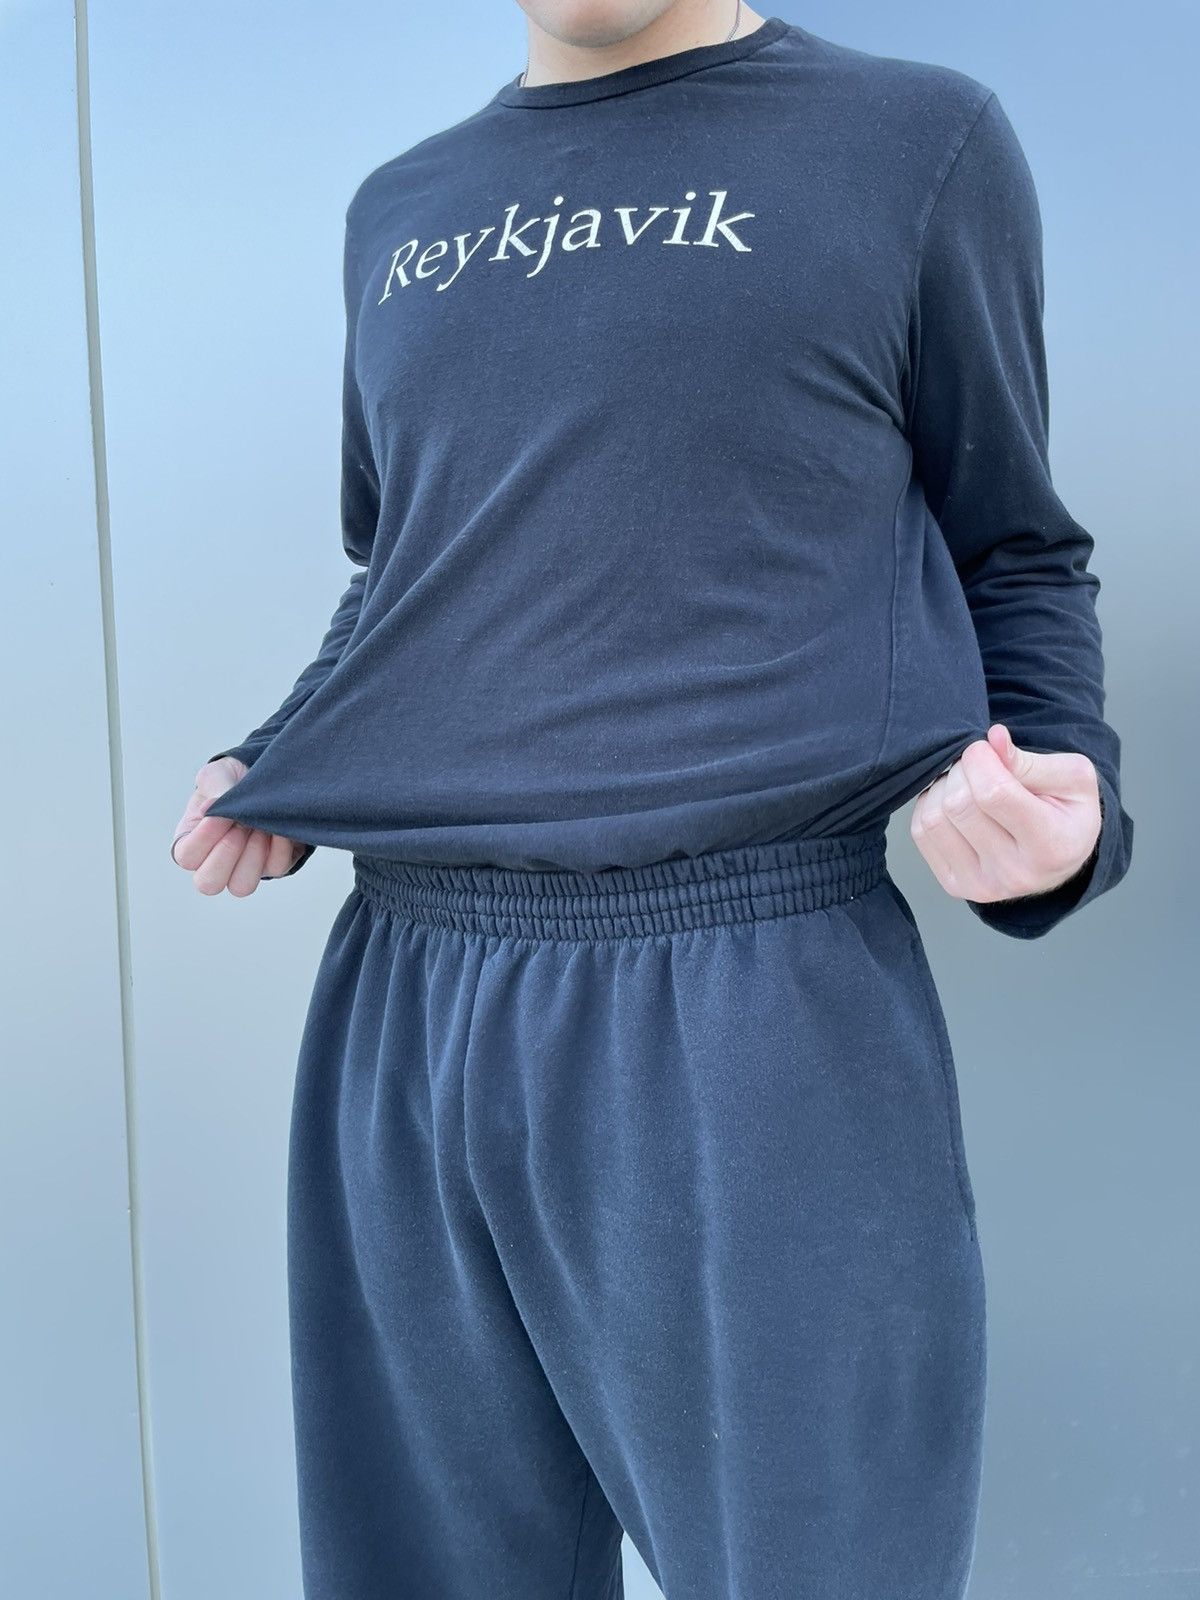 Helmut lang Reykjavik - Tシャツ/カットソー(七分/長袖)